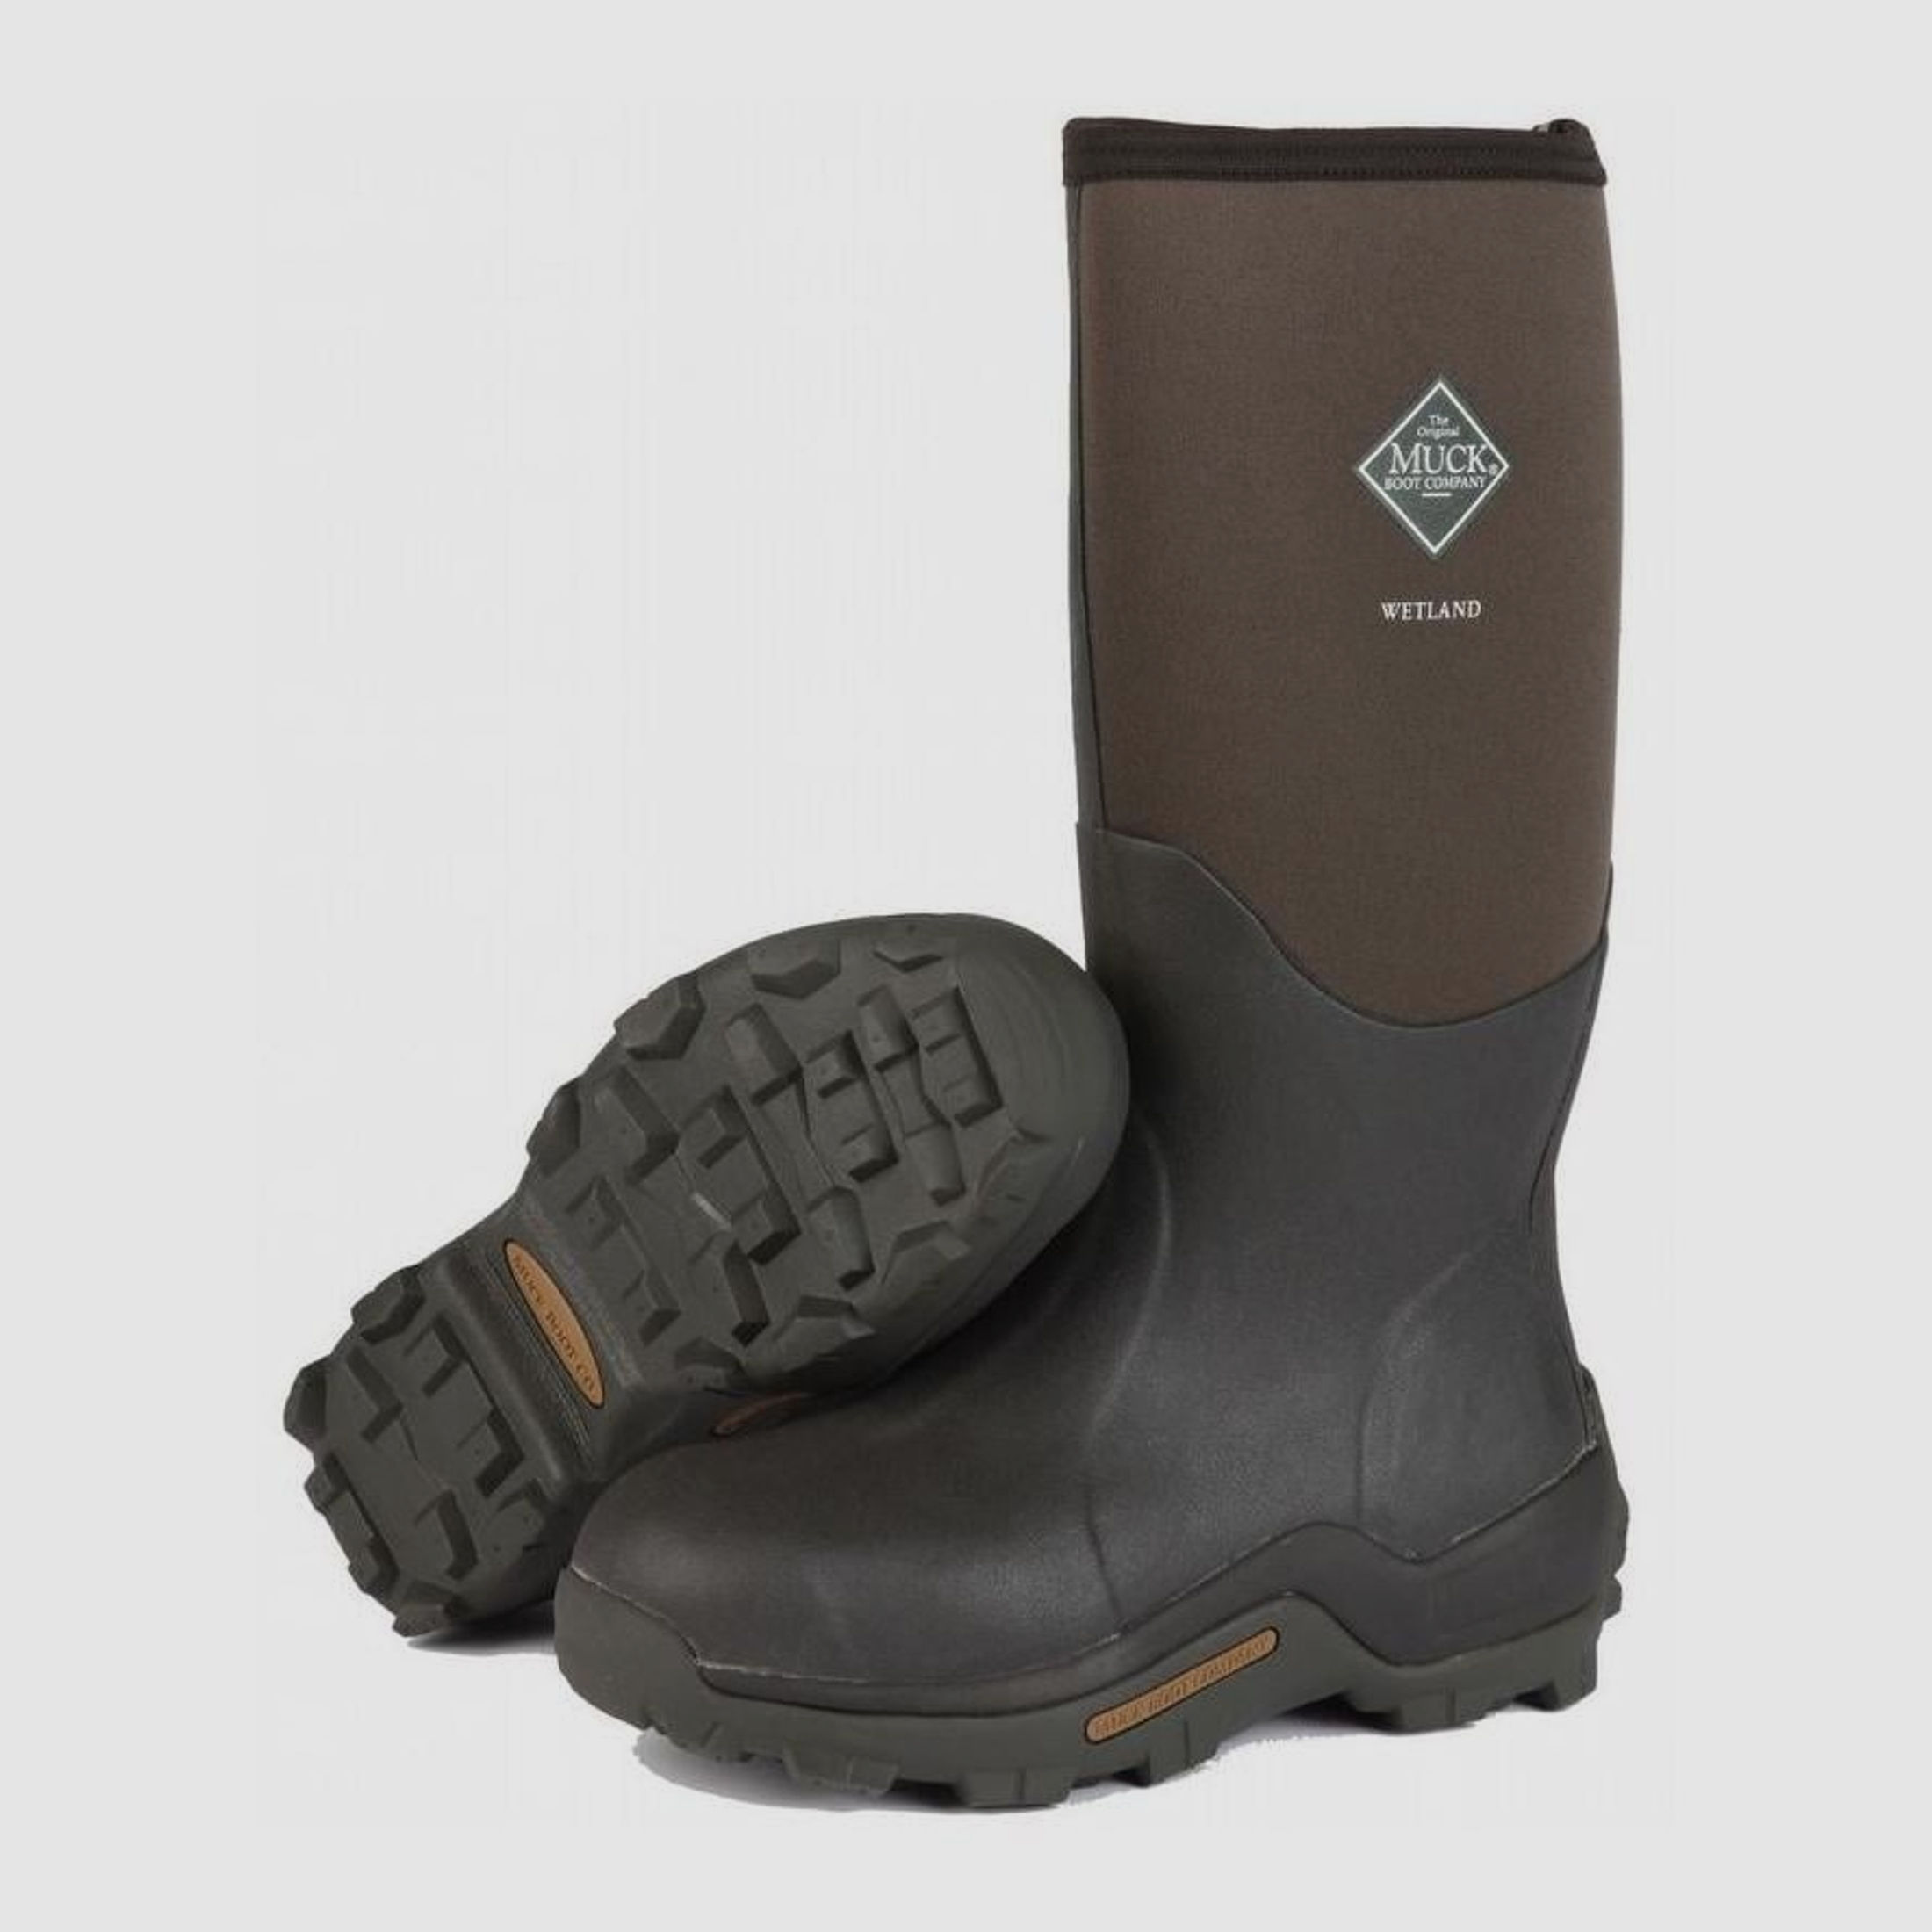 The Original Muck Boot Company Gummistiefel Unisex Wetland Braun    42